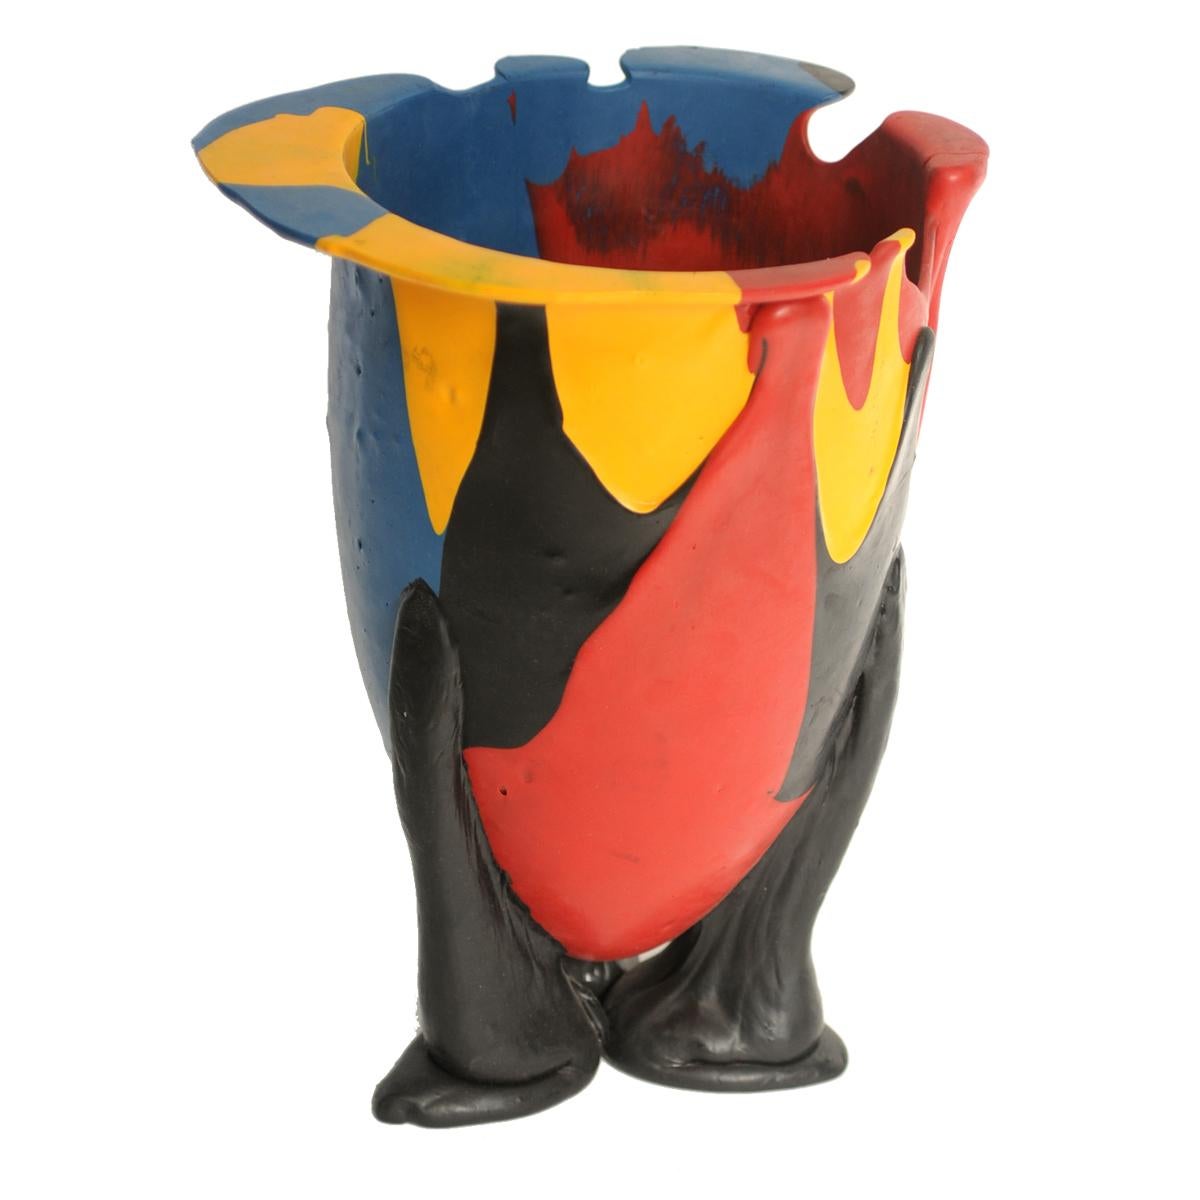 Amazonia vase - matt yellow, matt red, matt blue, matt black

Vase in soft resin designed by Gaetano Pesce in 1995 for Fish Design collection.

Measures: L Ø 22cm x H 36cm

Colours: matt yellow, matt red, matt blue, matt black.
Vase in soft resin